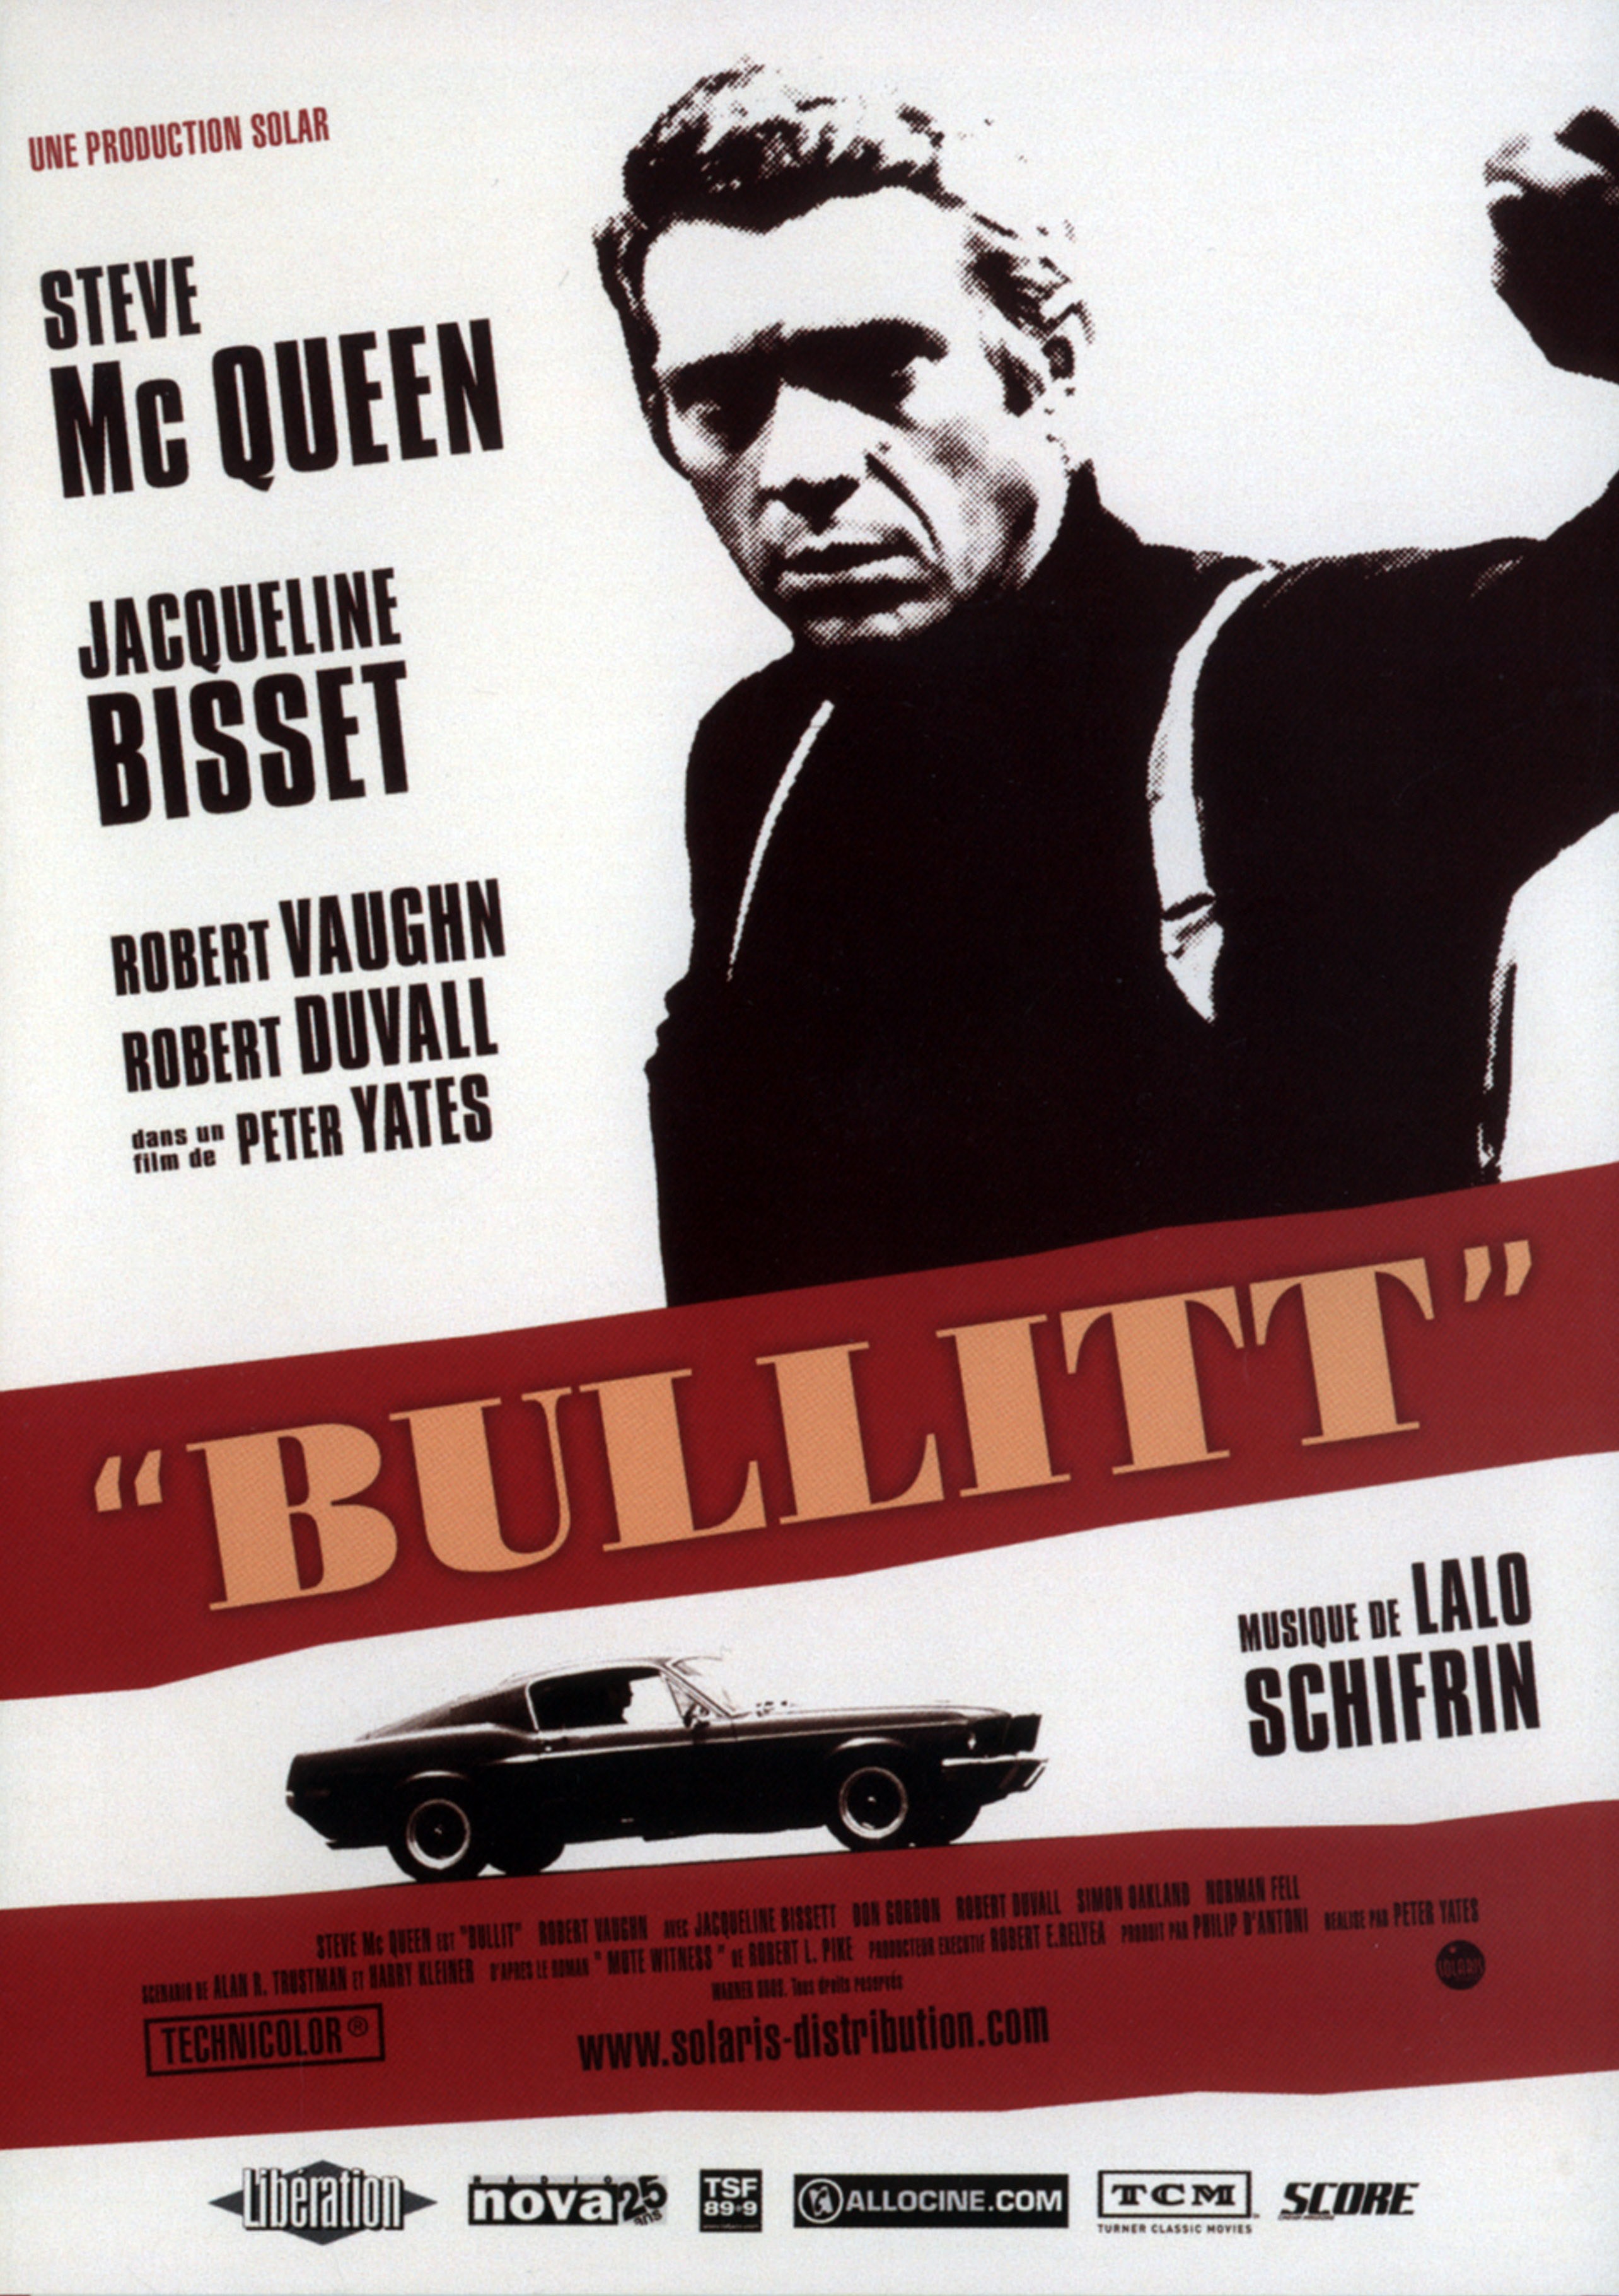 La locandina del film Bullitt, 1968